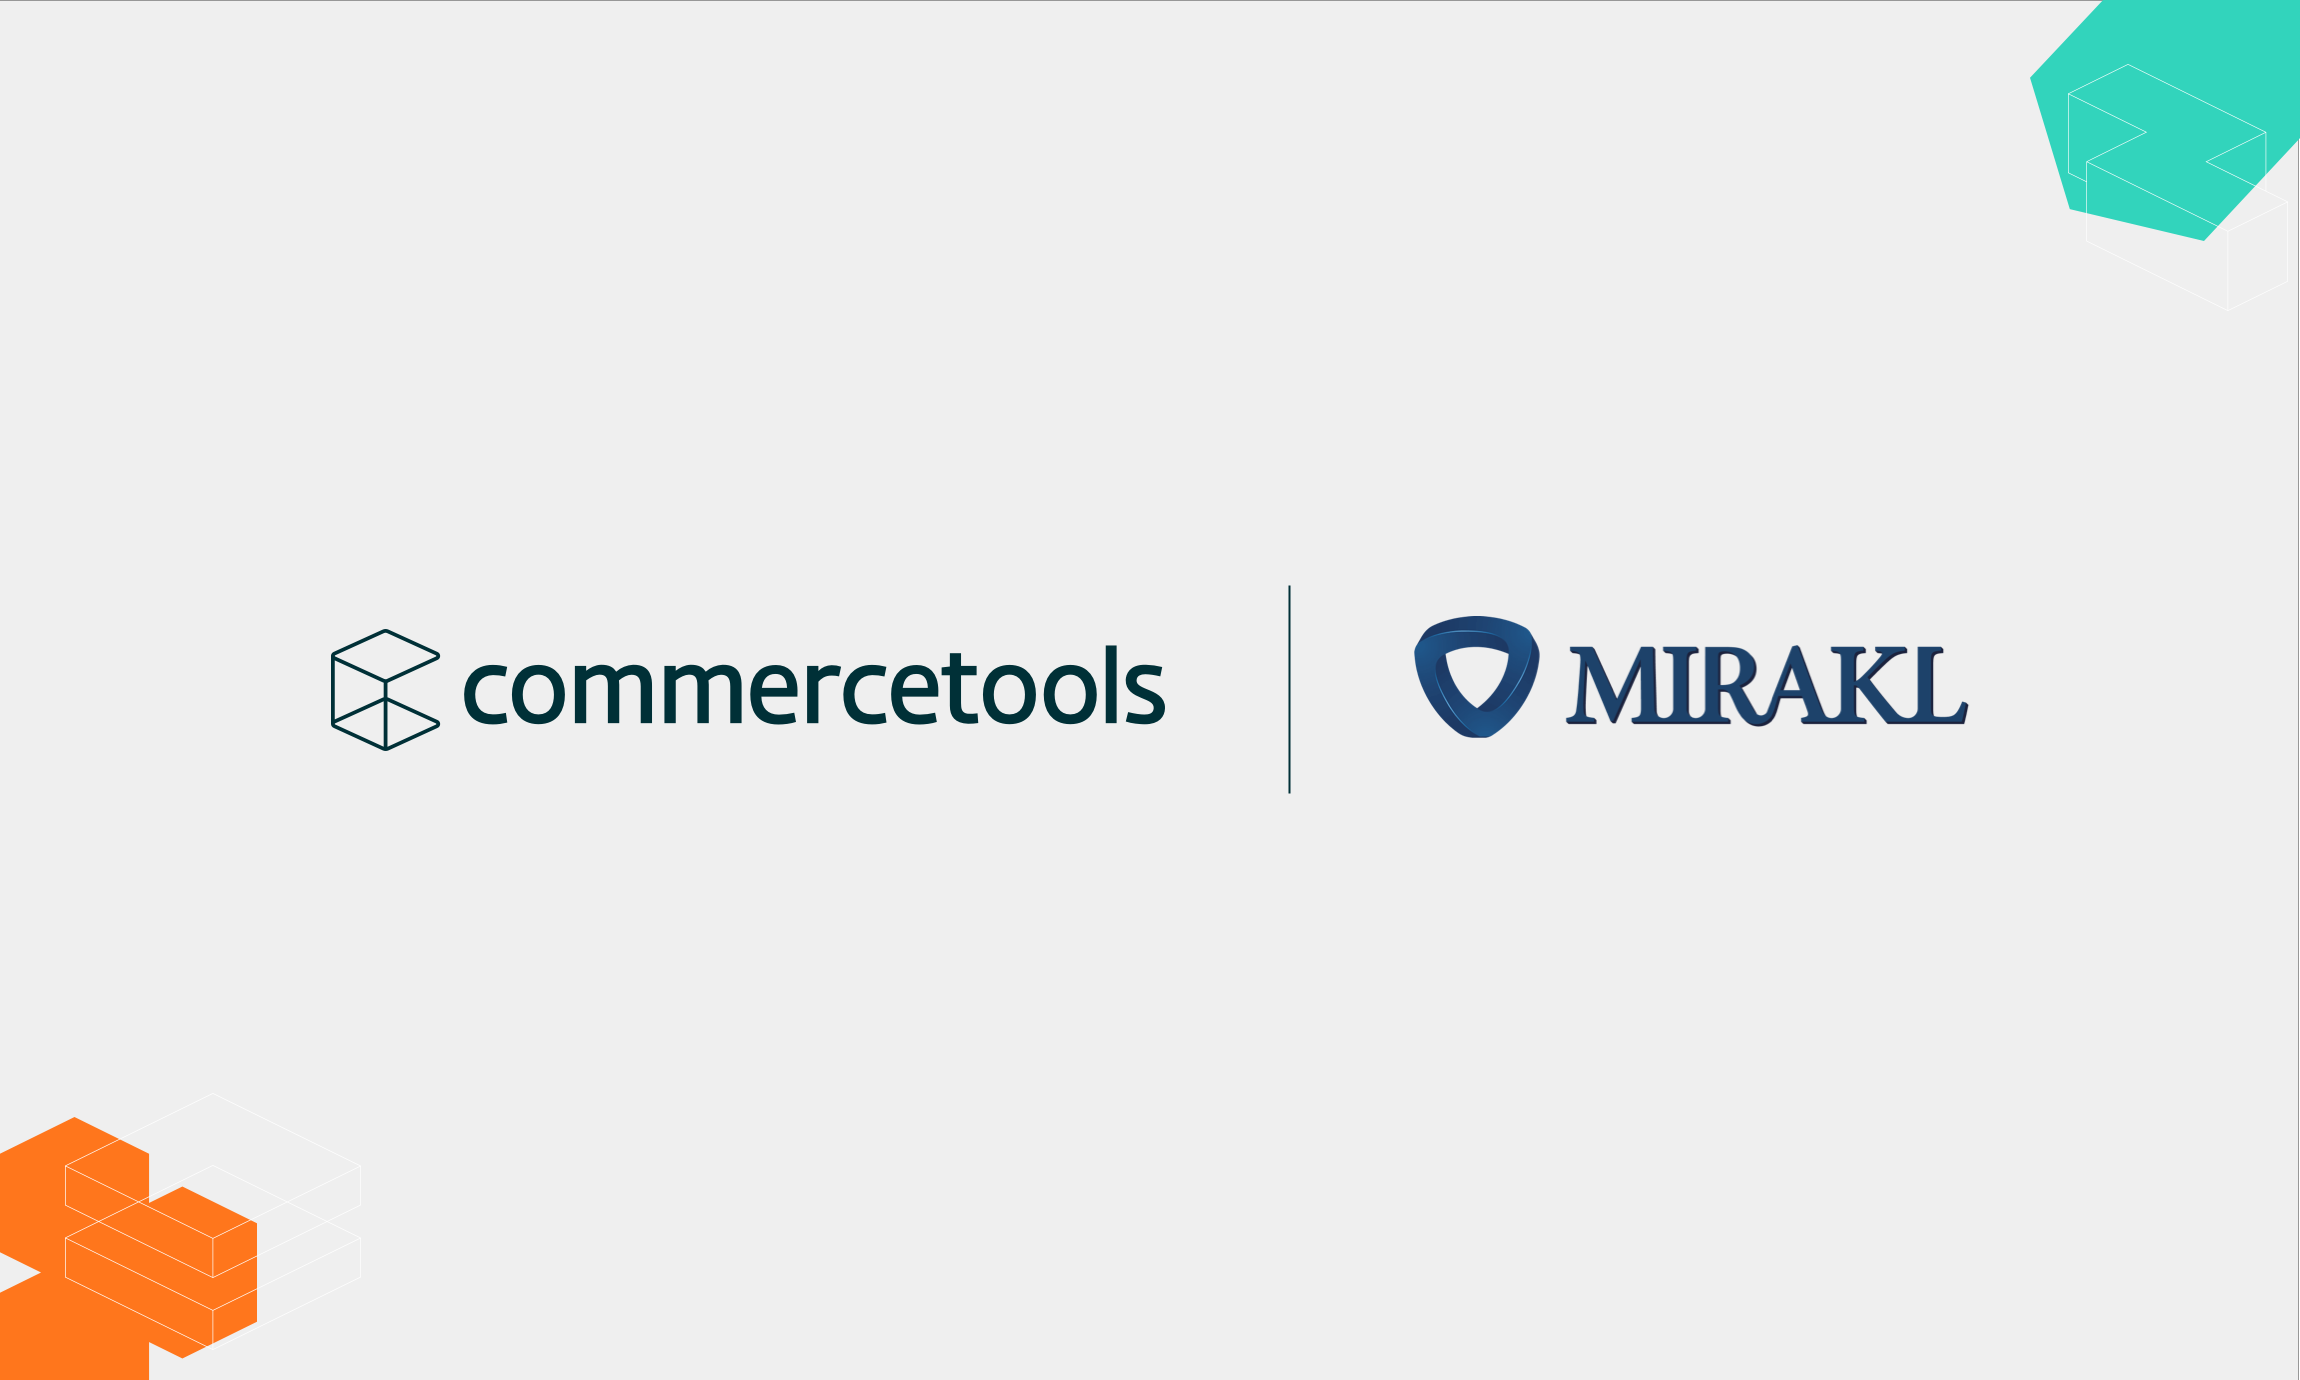 commercetools and Mirakl partnership announcement